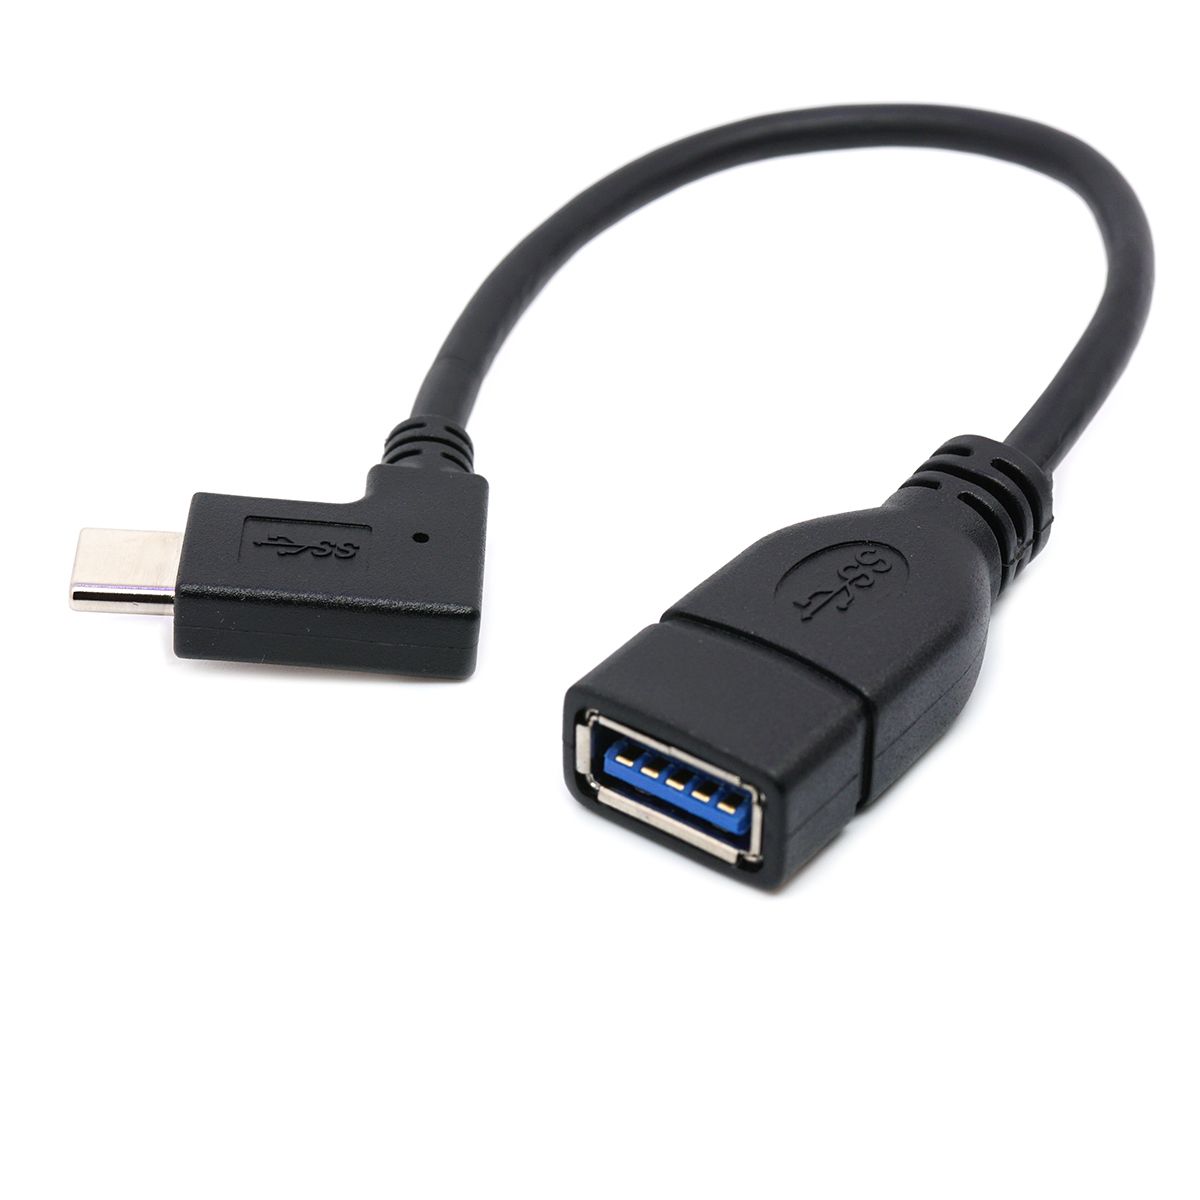 USB 3.0 cable 20 cm tipo a enchufe a hembra ángulo en negro